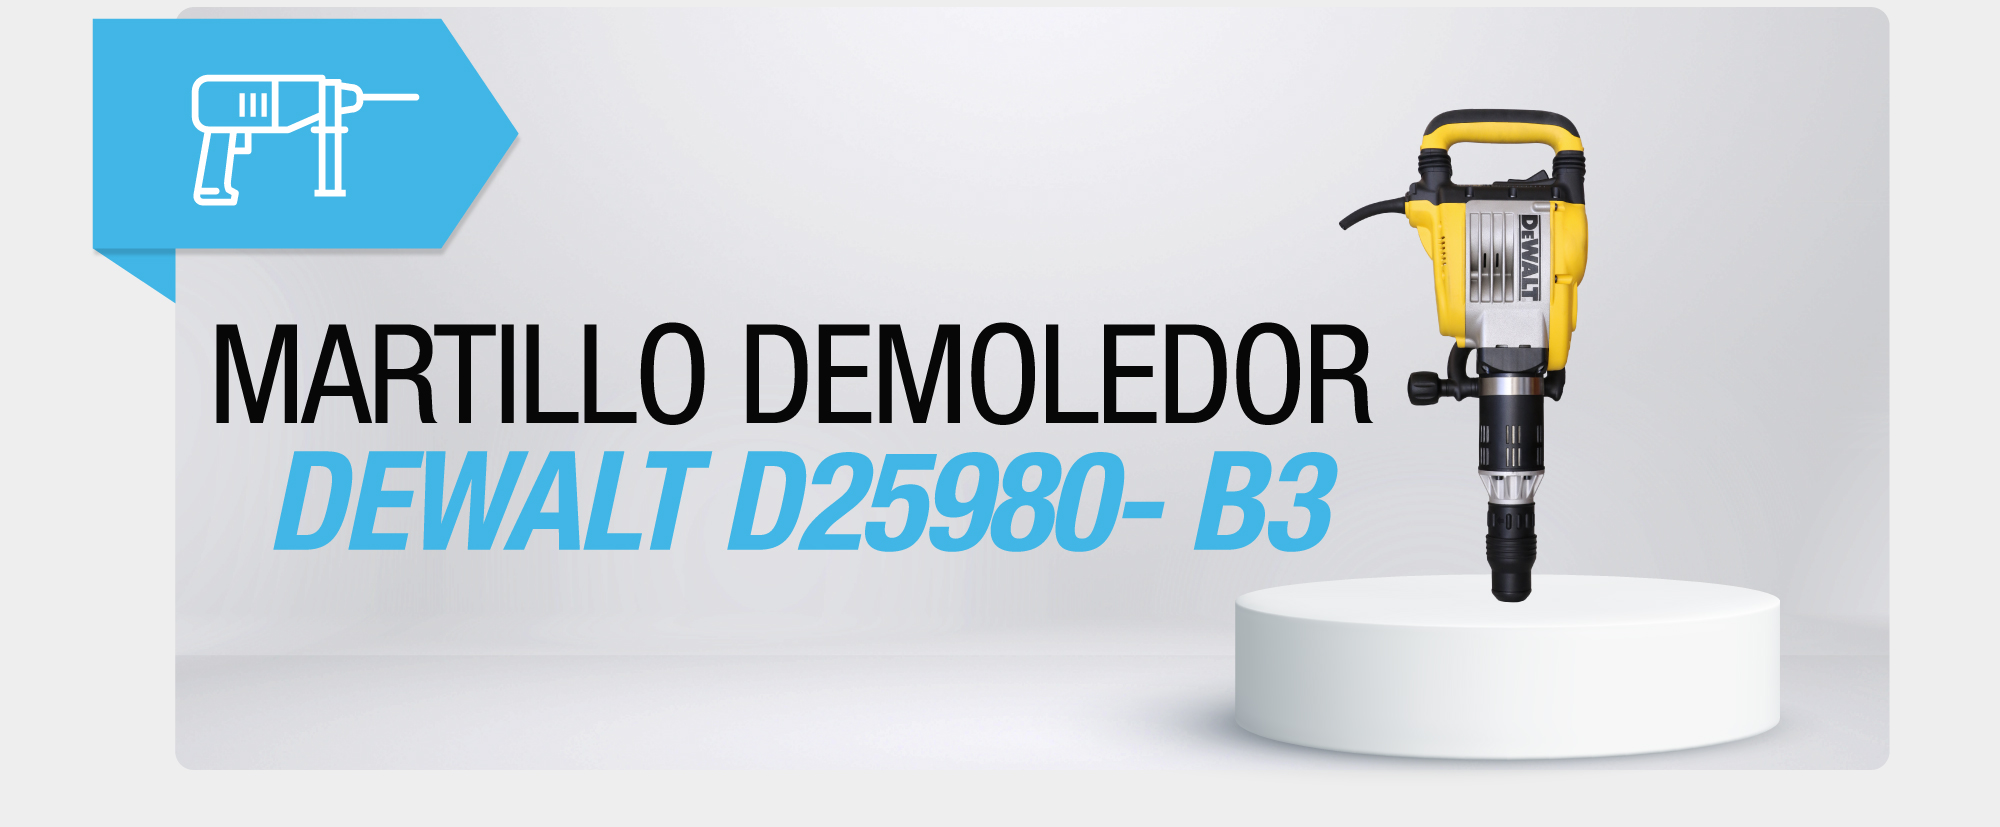 Martillo demoledor DeWalt D25980- B3 - 2024 HEE-002